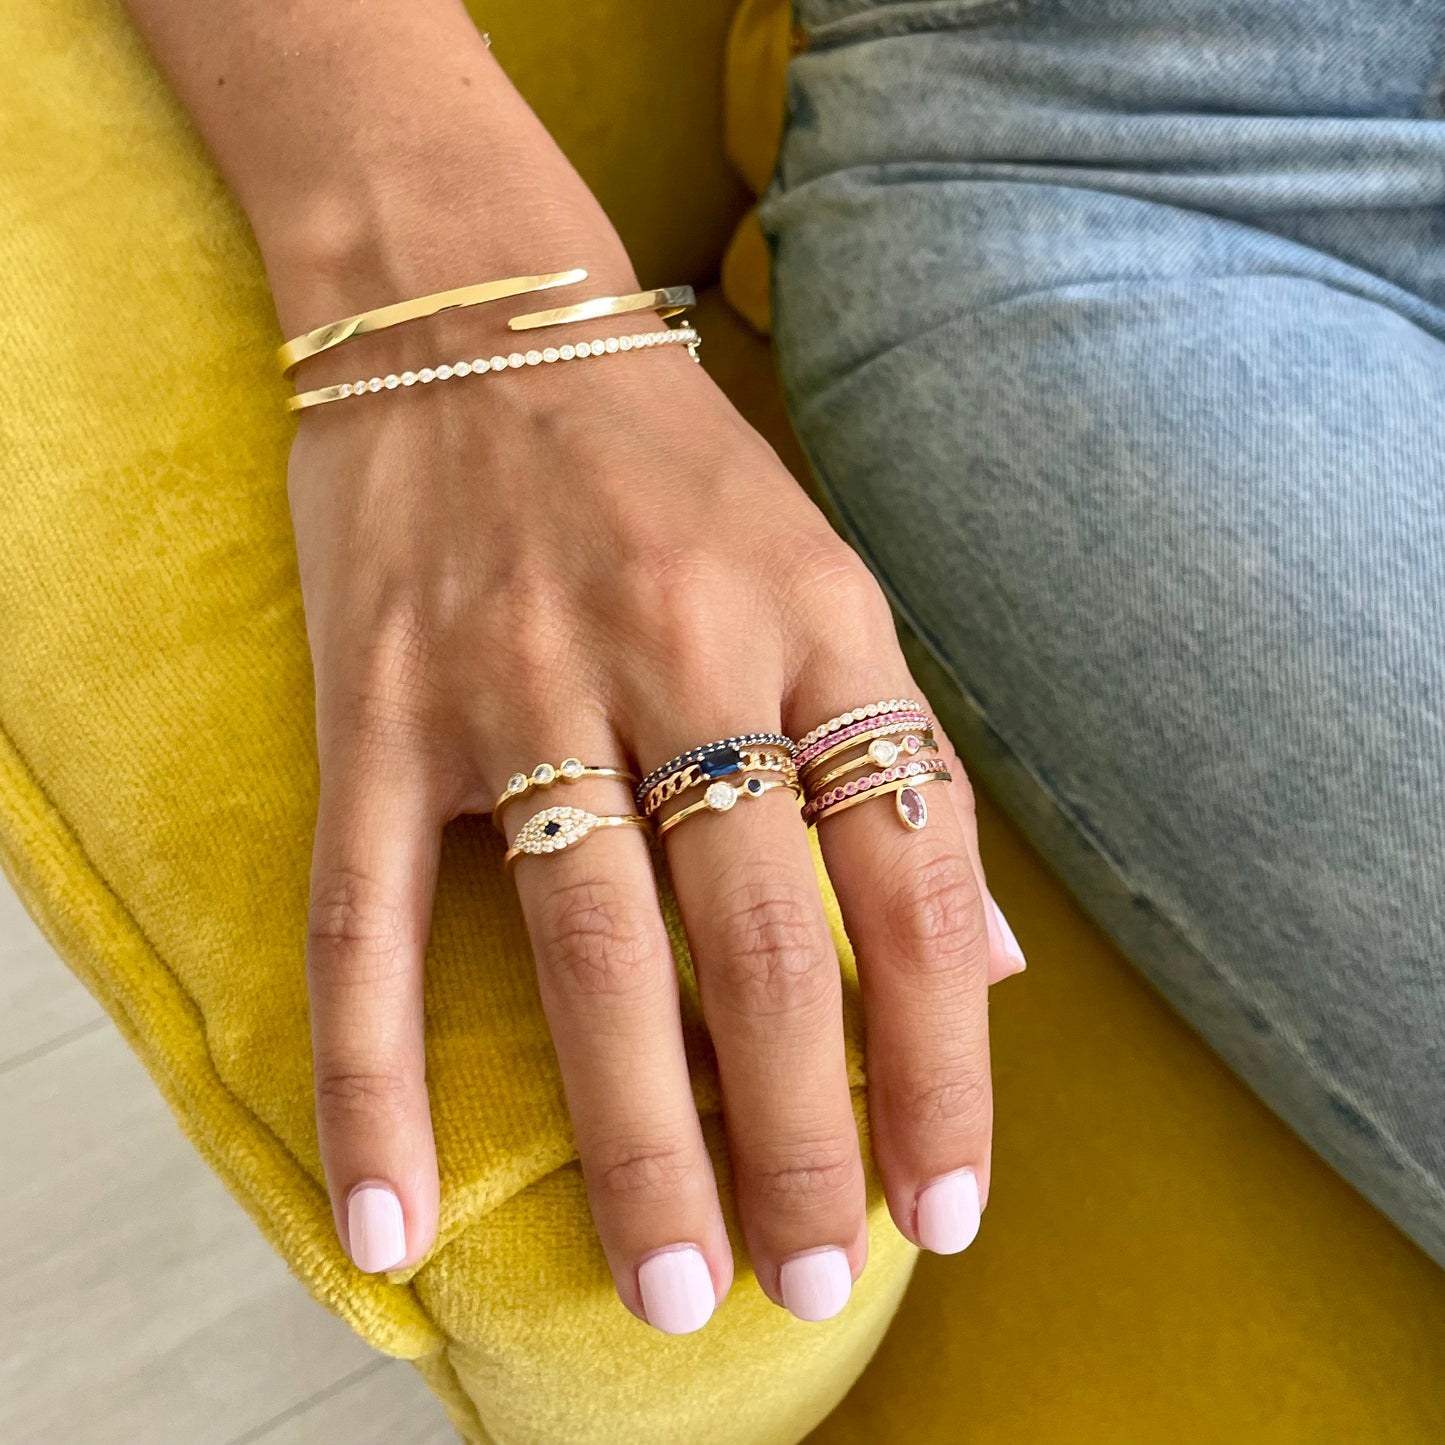 Open Wrap Solid Gold Bangle - - Jewelry - Goldie Paris Jewelry - Bracelet